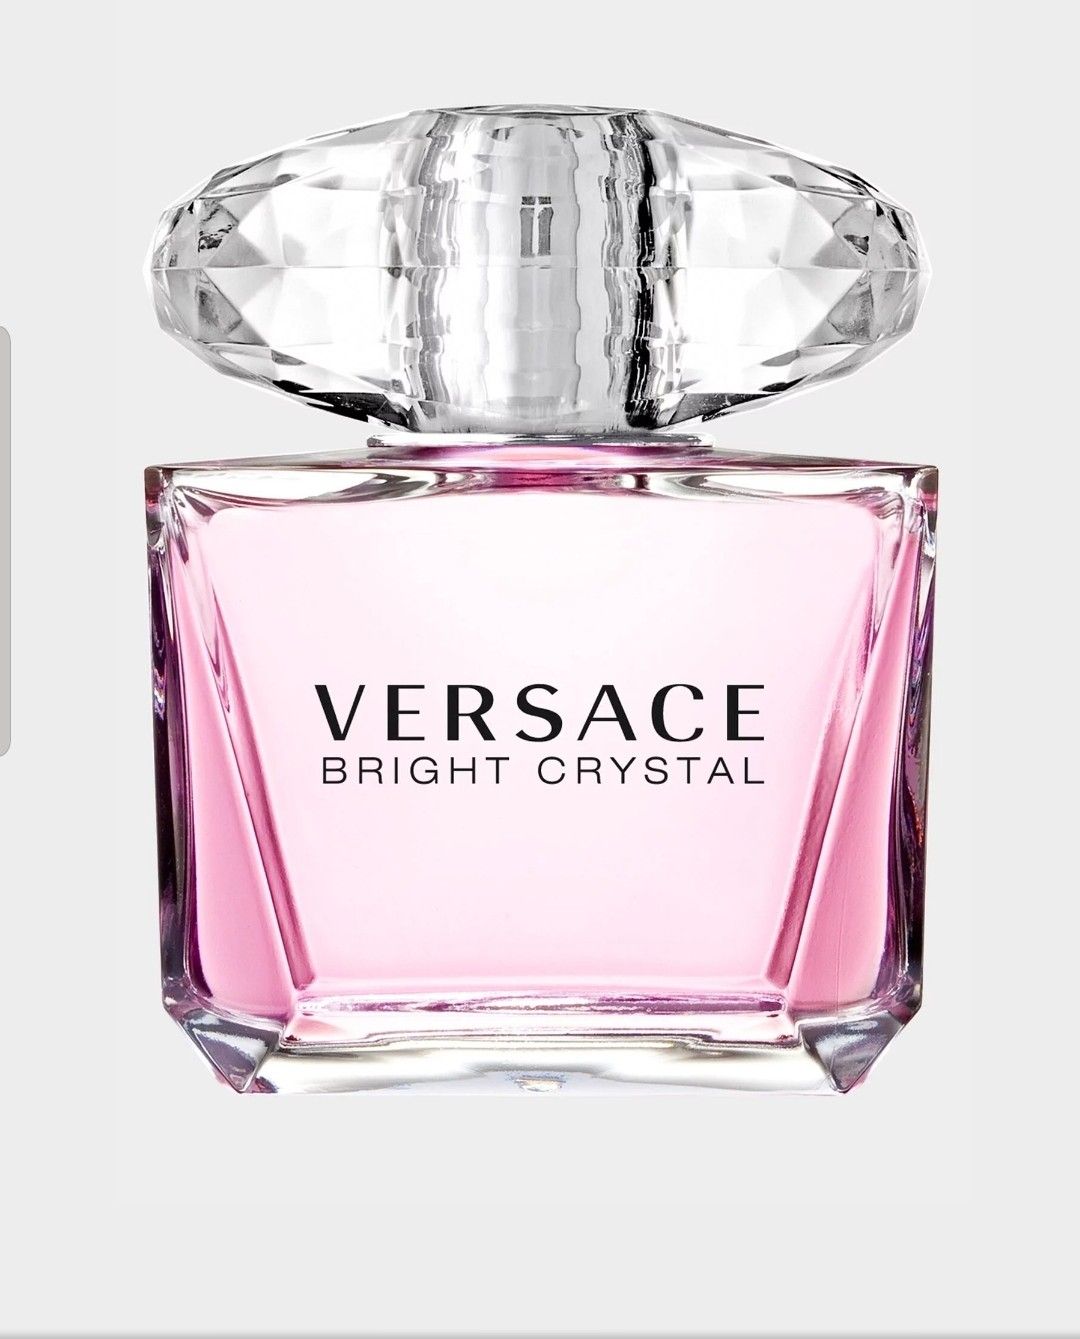 Versace bright crystal